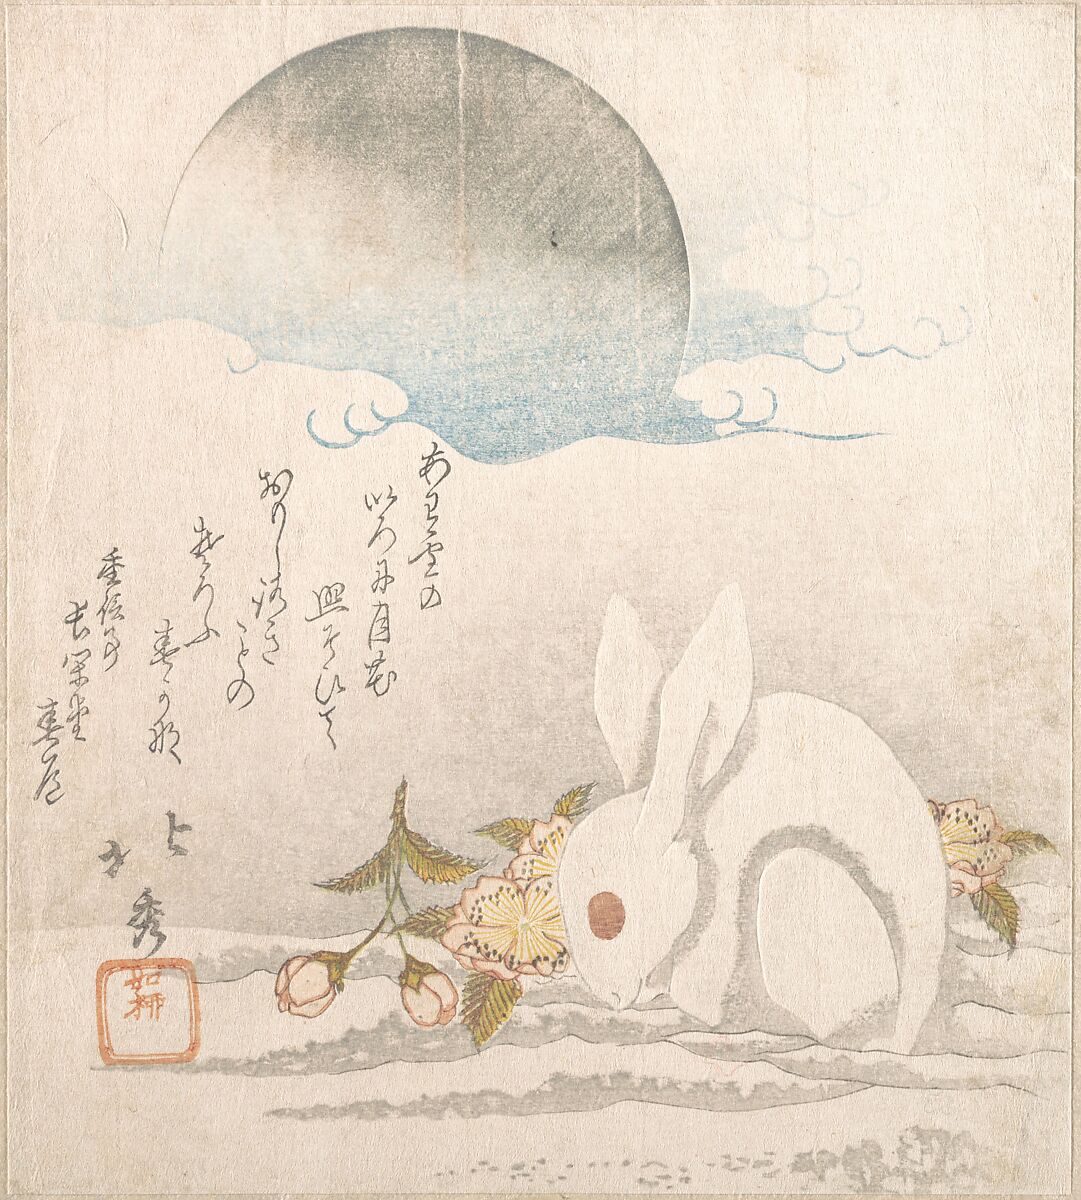 Rabbit in the Snow beneath the Moon 月下の兎, Katsushika Hokushū 葛飾北秀 (Japanese, active ca. 1810s–1830s), Woodblock print (surimono); ink, color, and metallic pigments on paper, Japan 